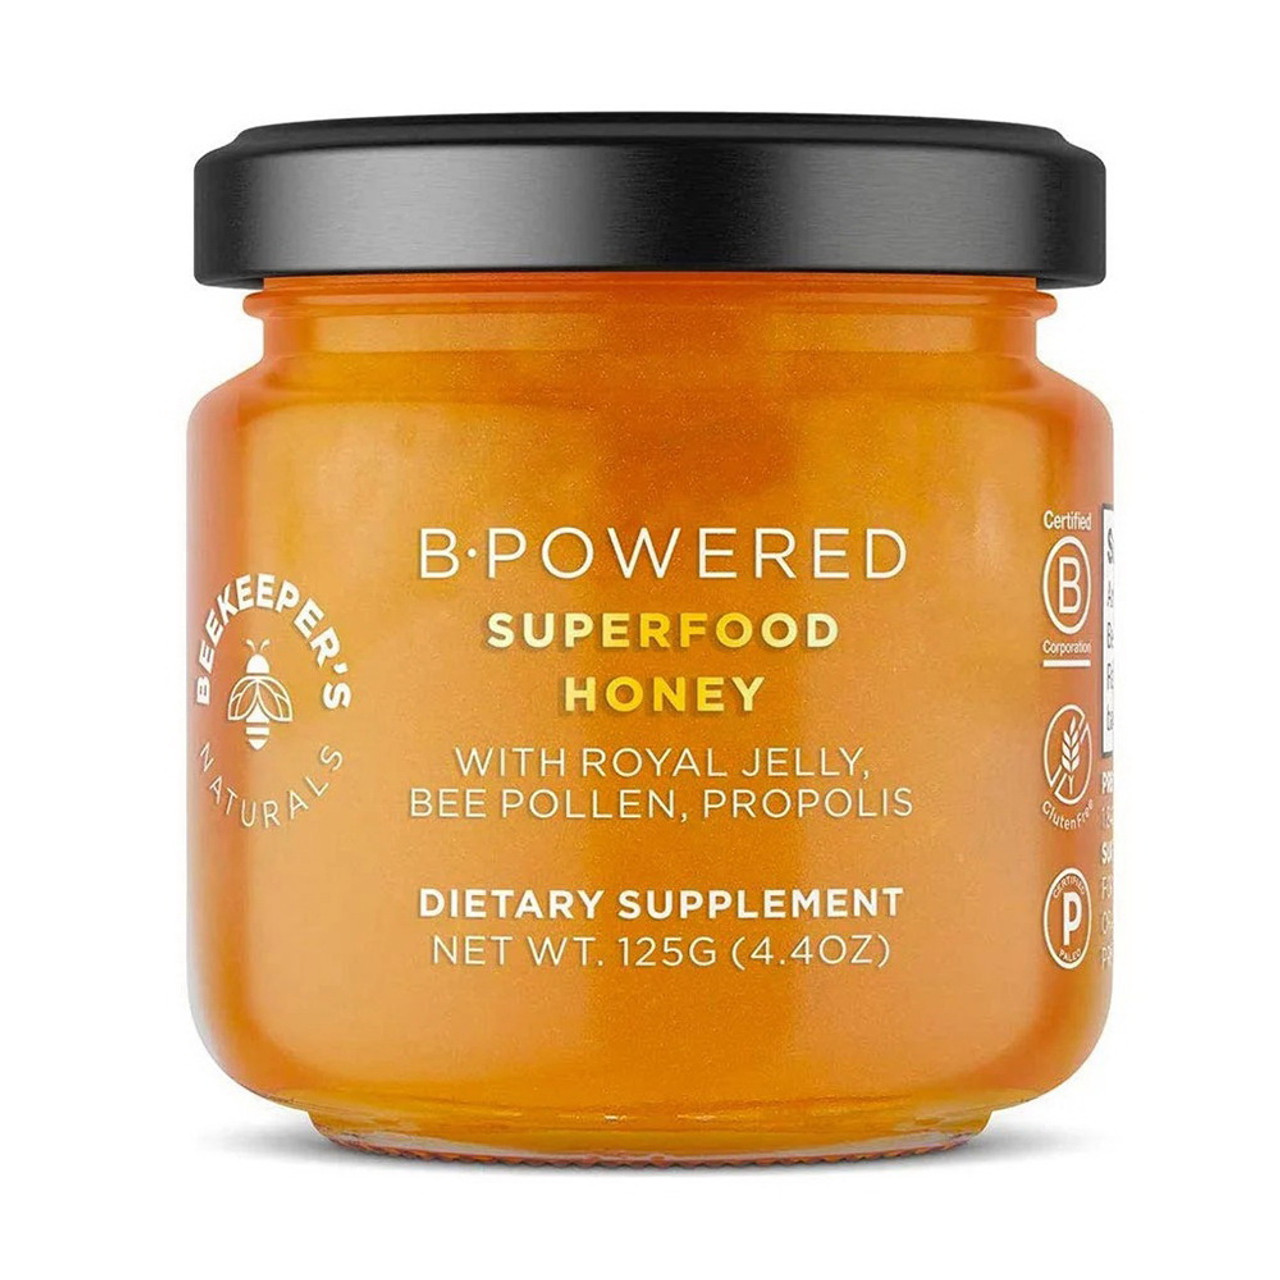 Beekeepers Naturals B.Powered Superfood Honey, 4.4 Oz